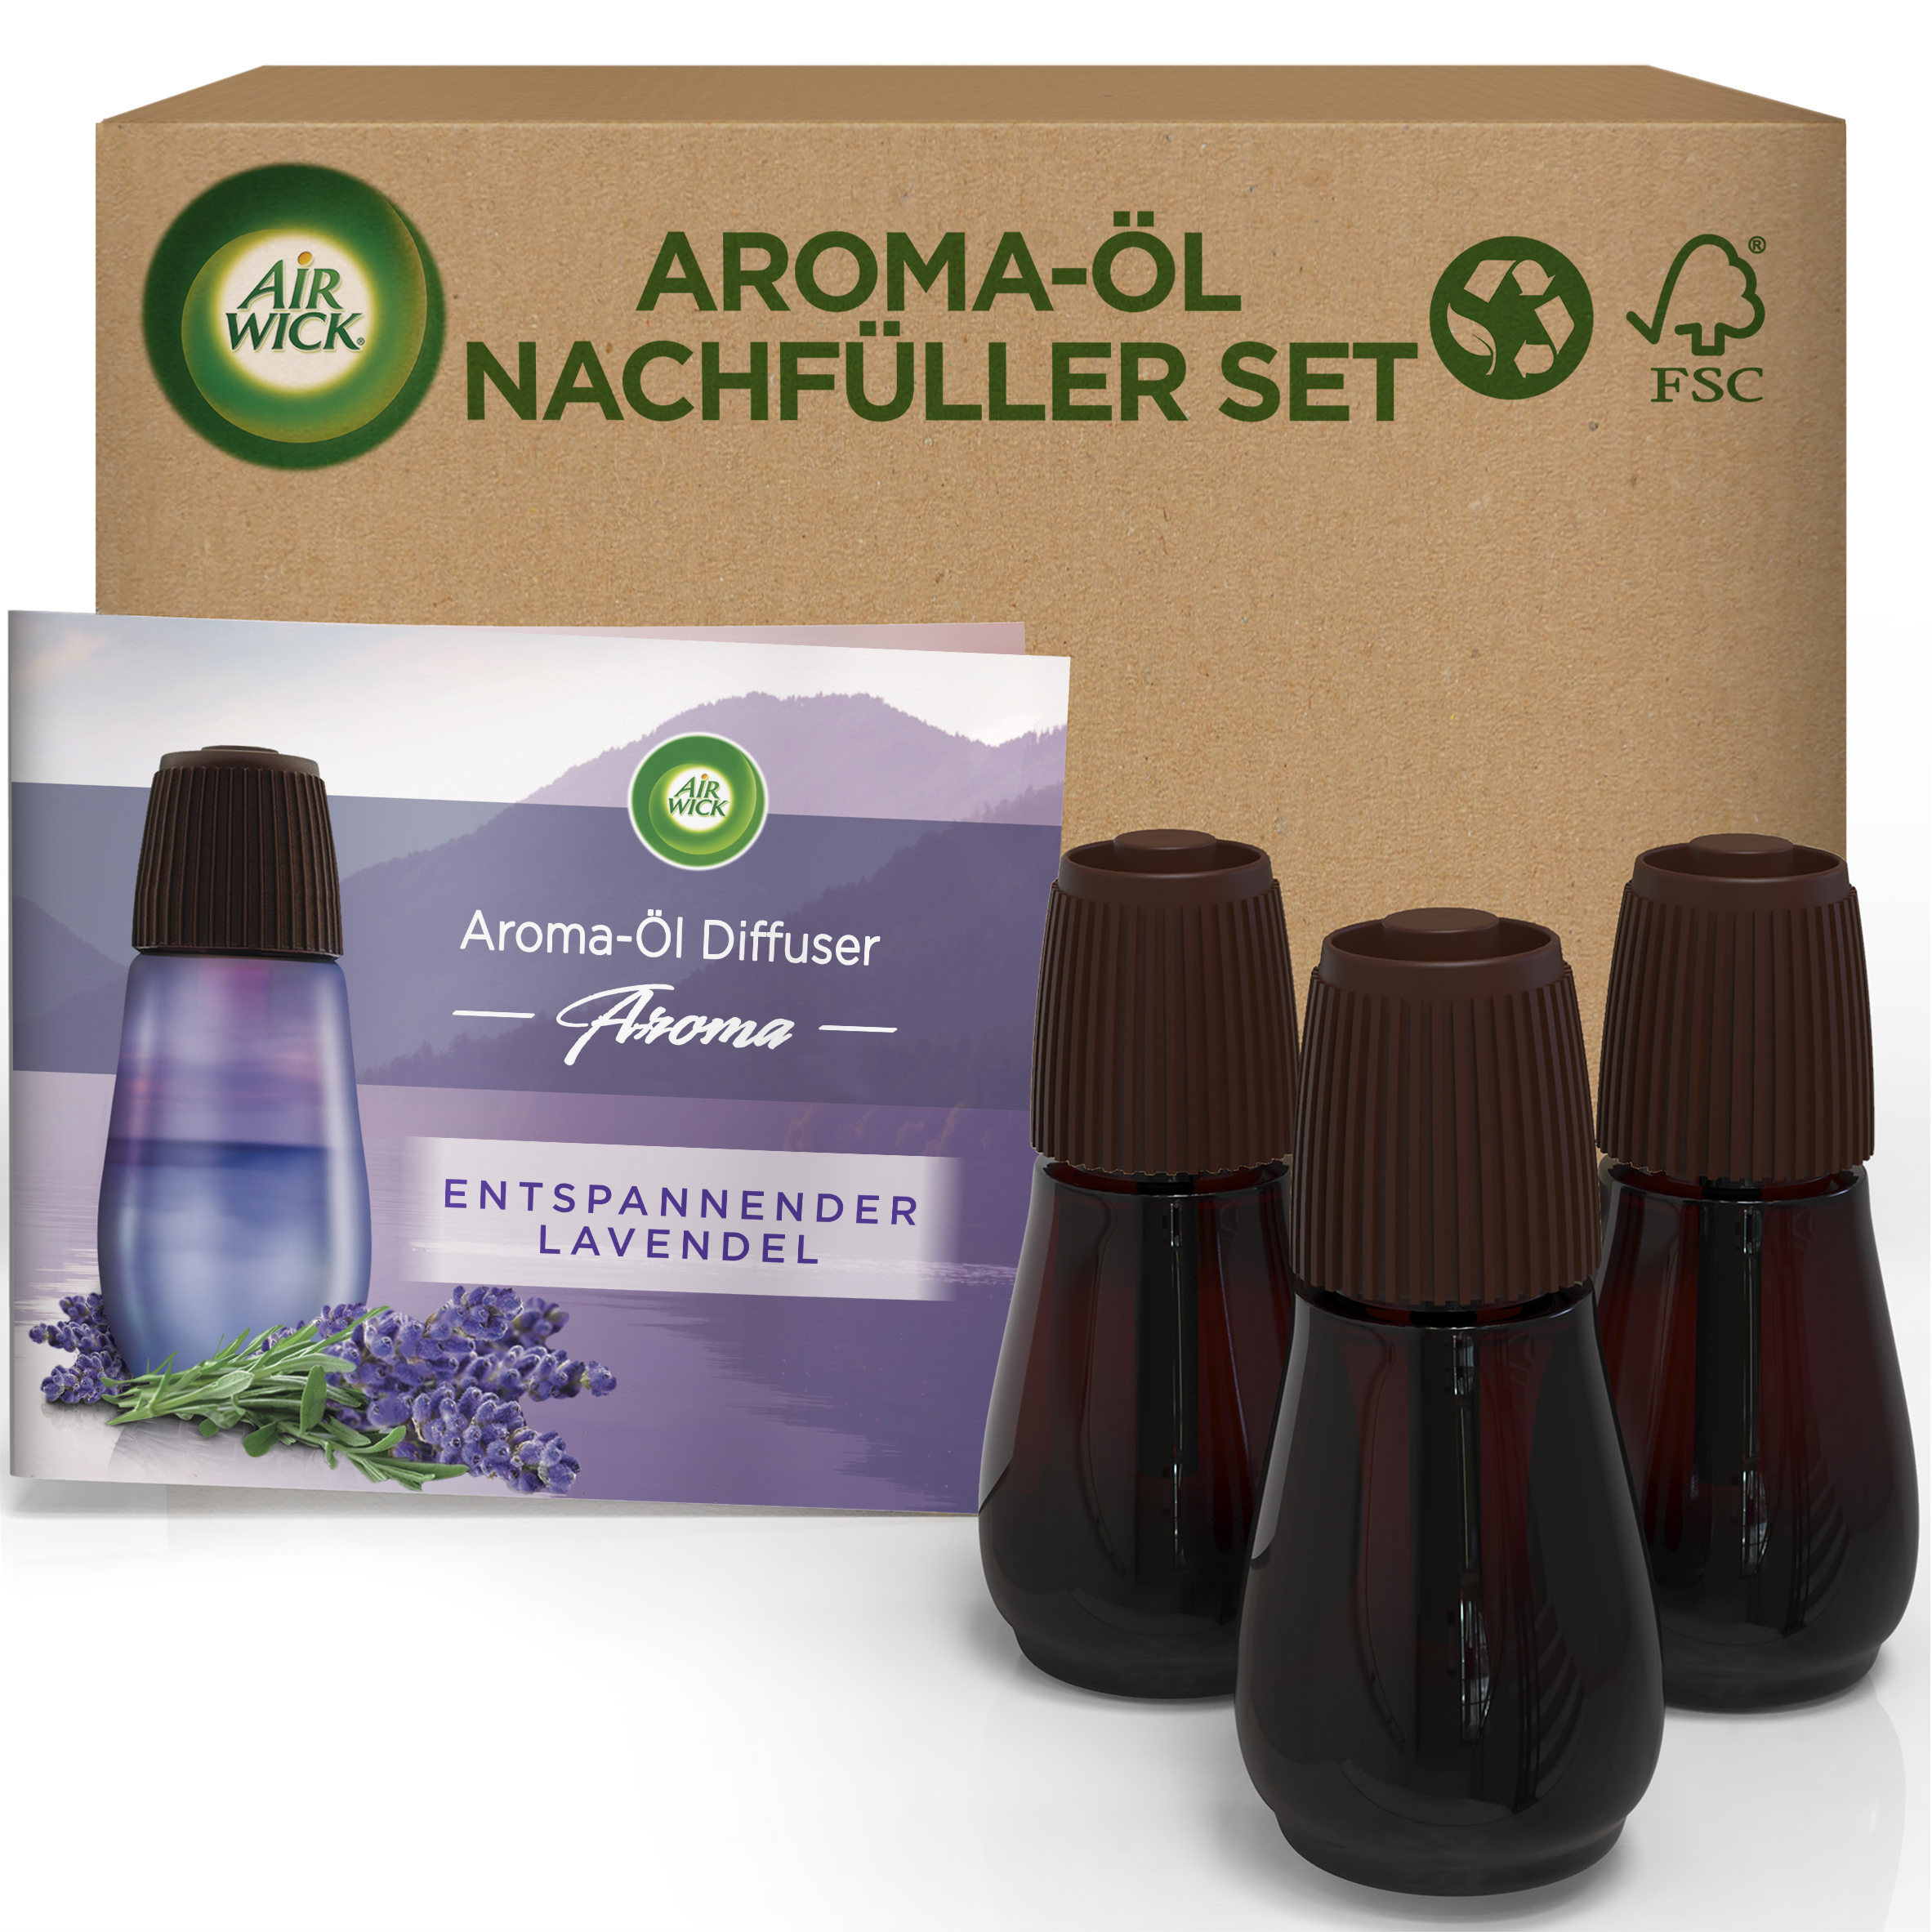 Air Wick Aroma-Öl Diffuser eCom Nachfüller-Set Entspannender Lavendel